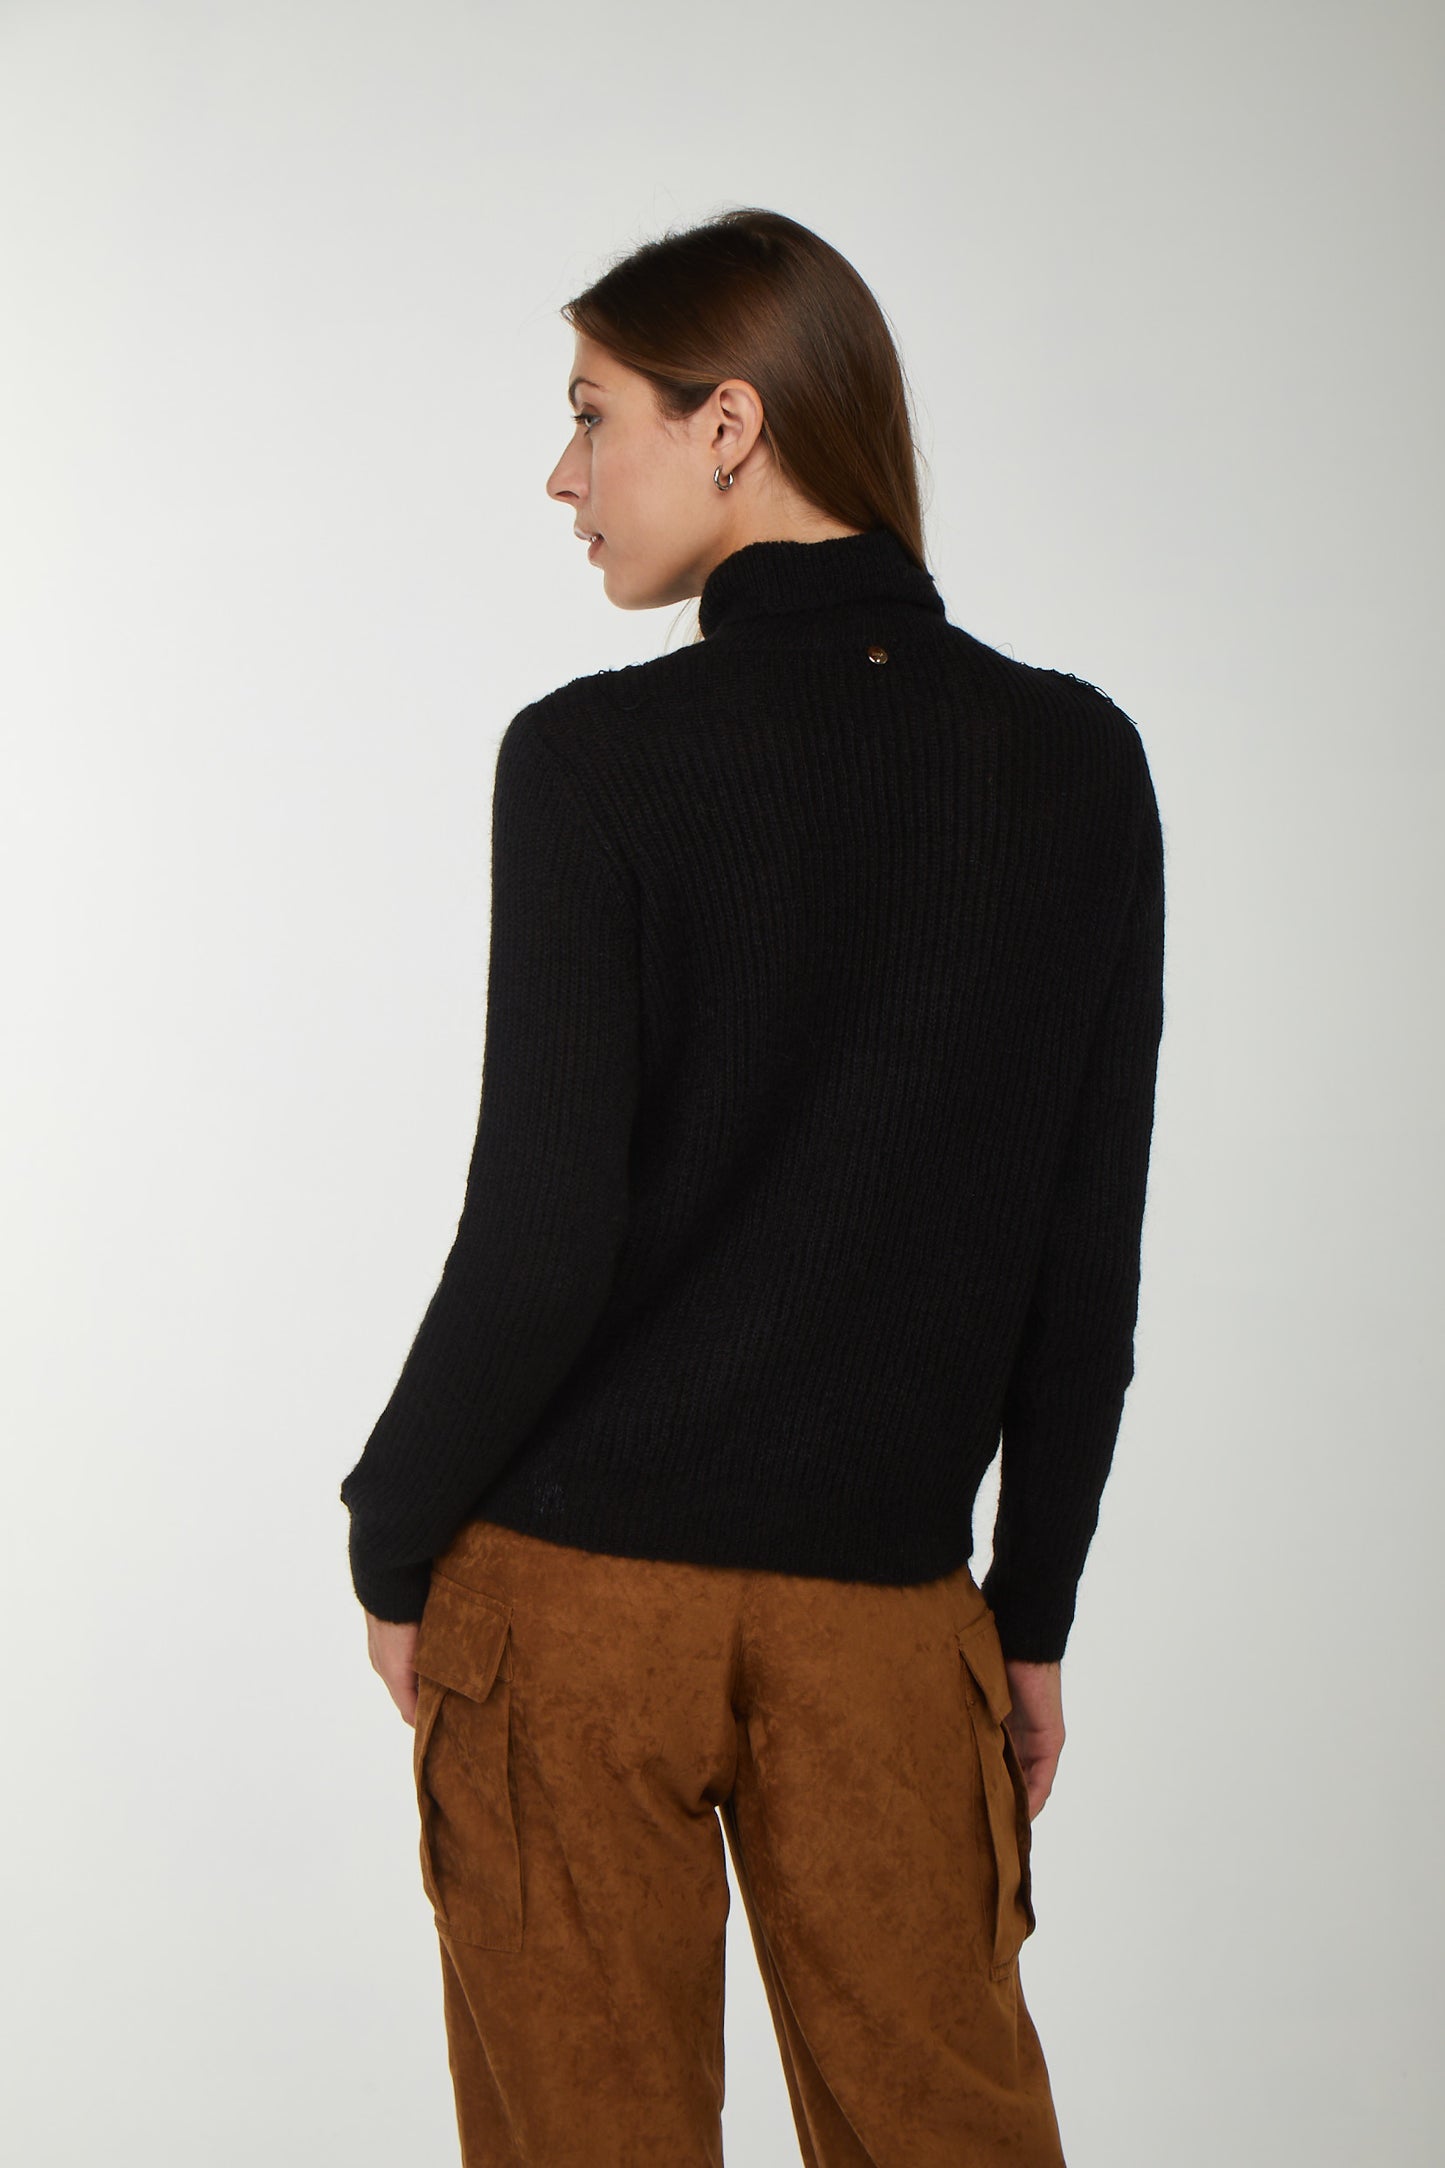 LIU JO Black Fringed Sweater